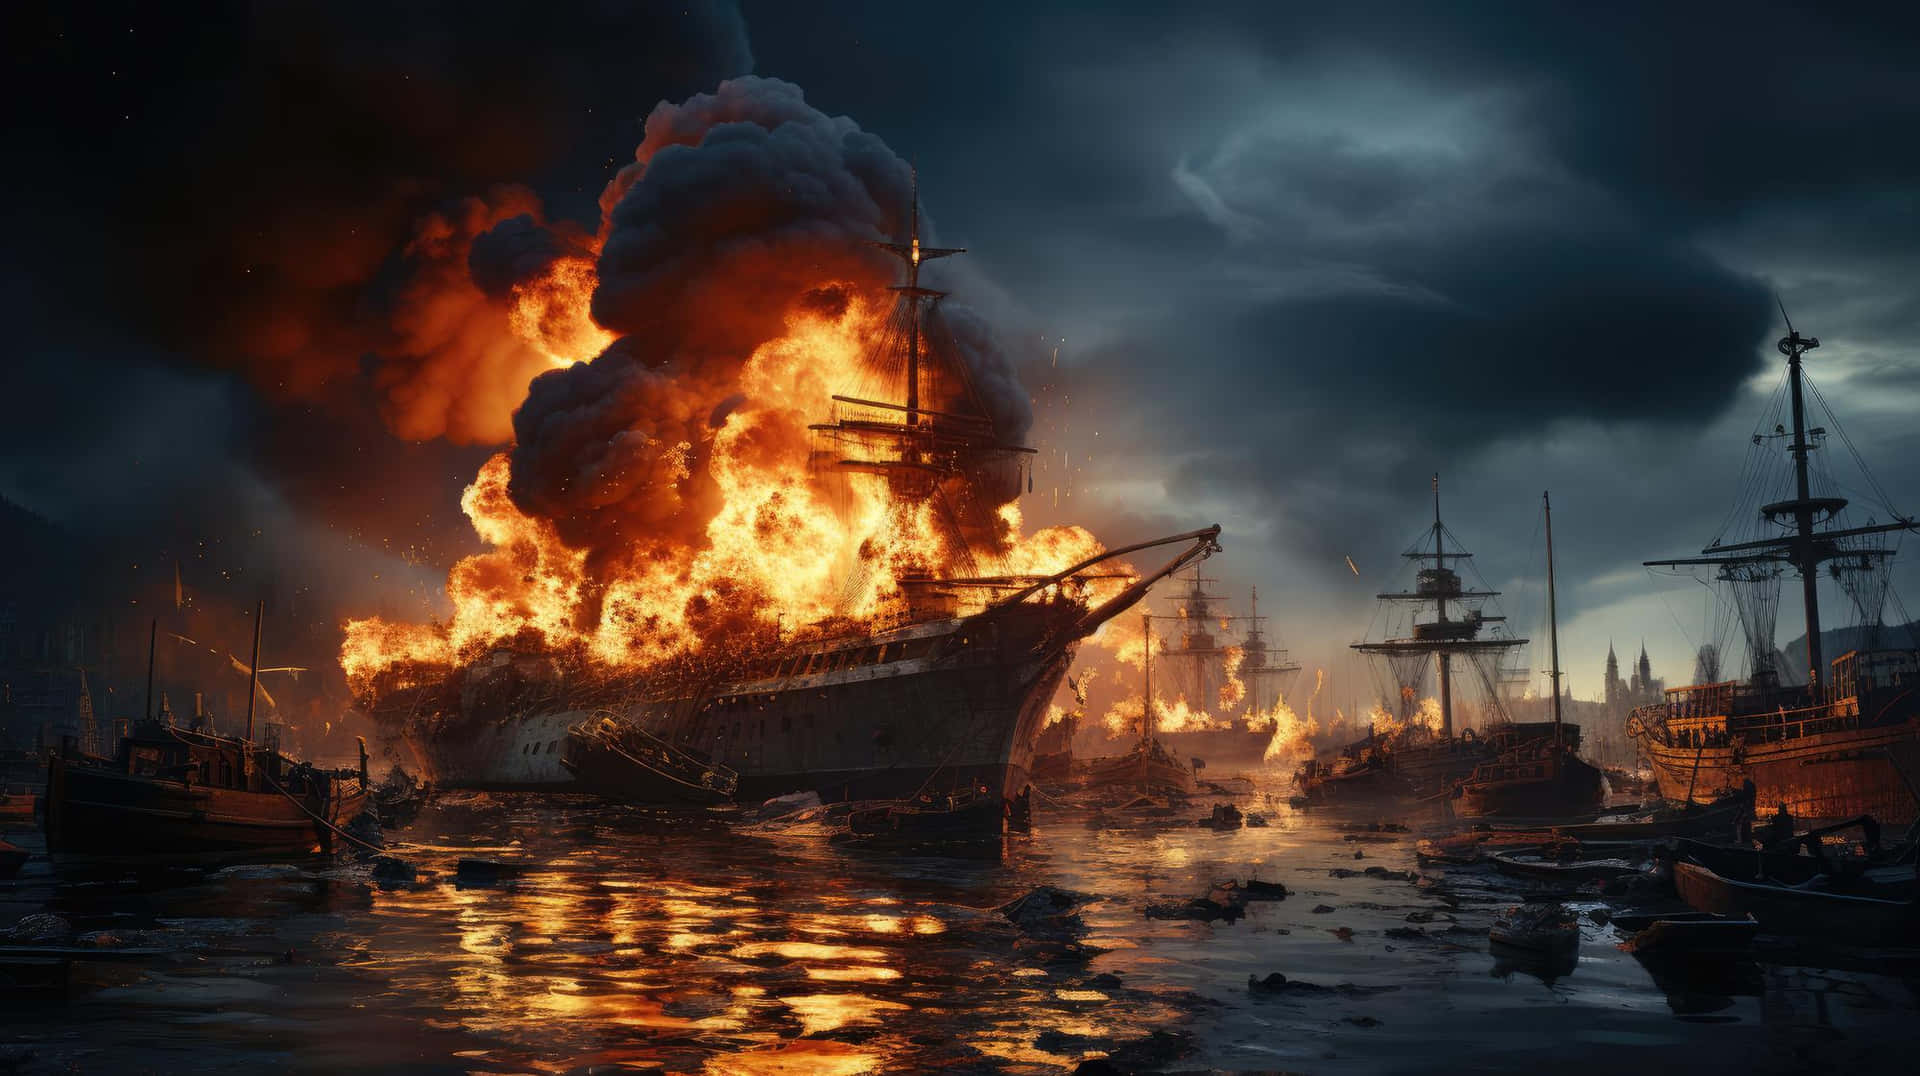 Fiery Ship Harbor Inferno Wallpaper